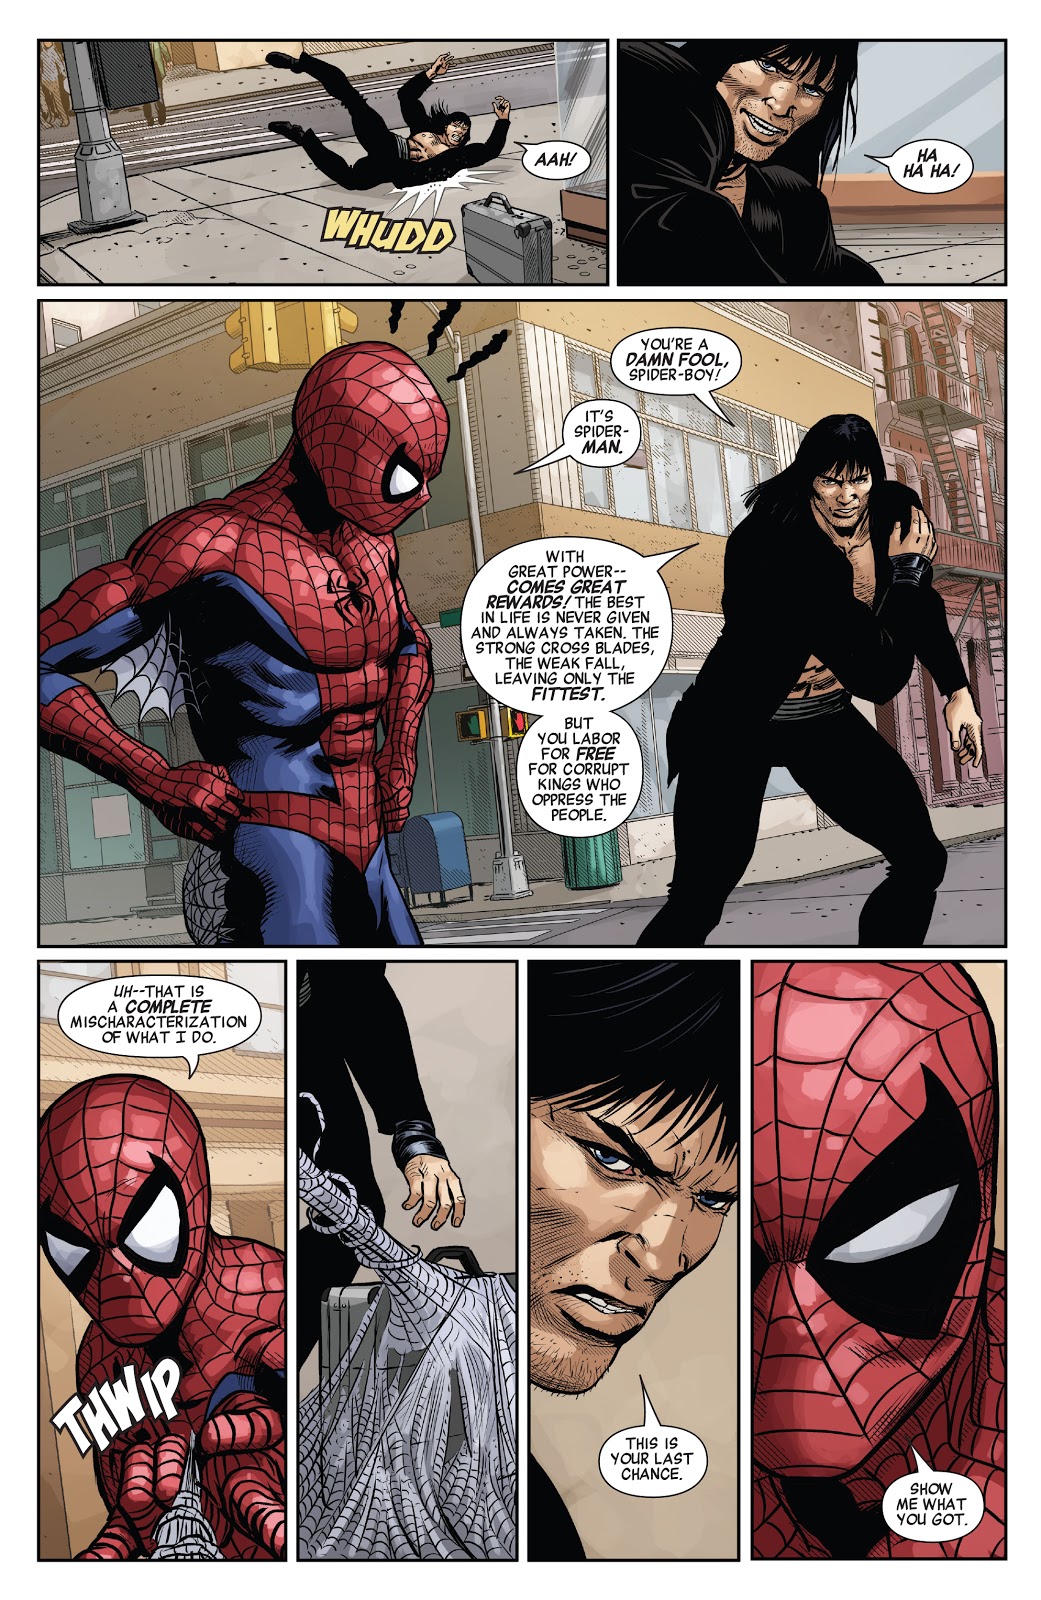 Spider-Man Meets Conan The Barbarian